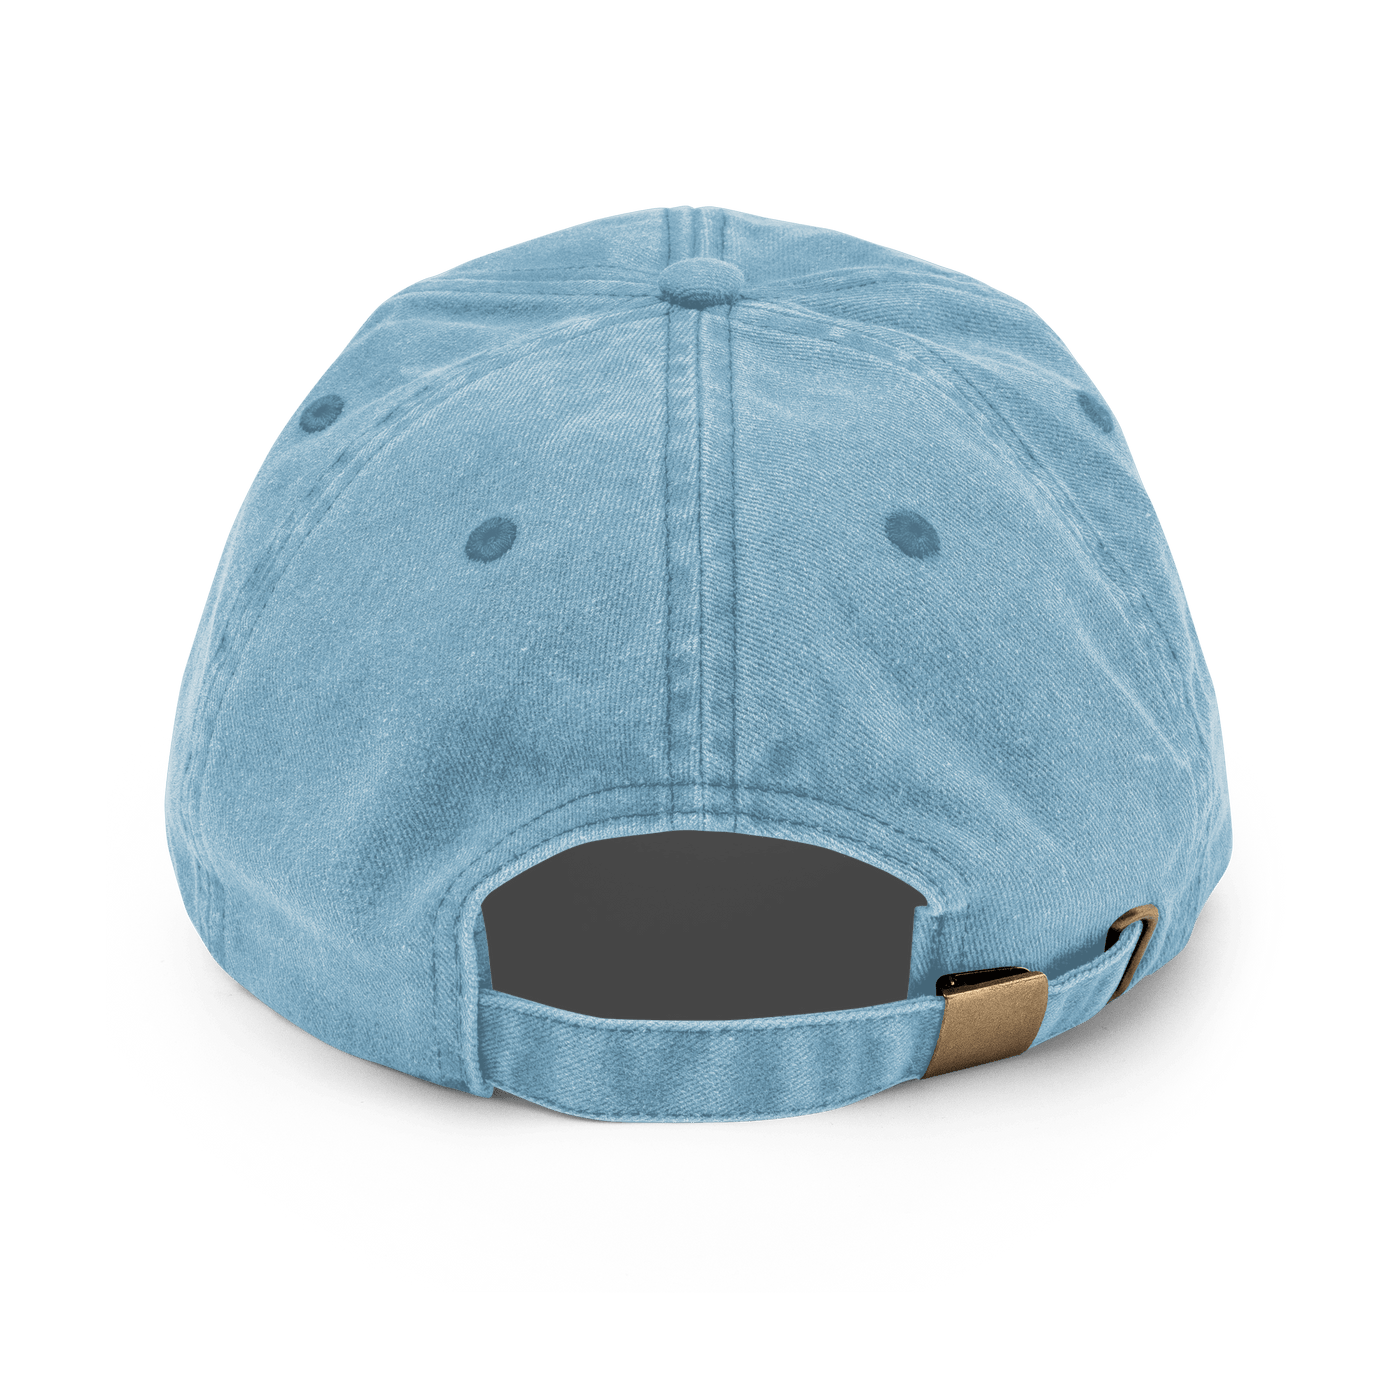 Ramen Bowl Vintage Hat - Vintage Light Denim - - Just Another Cap Store